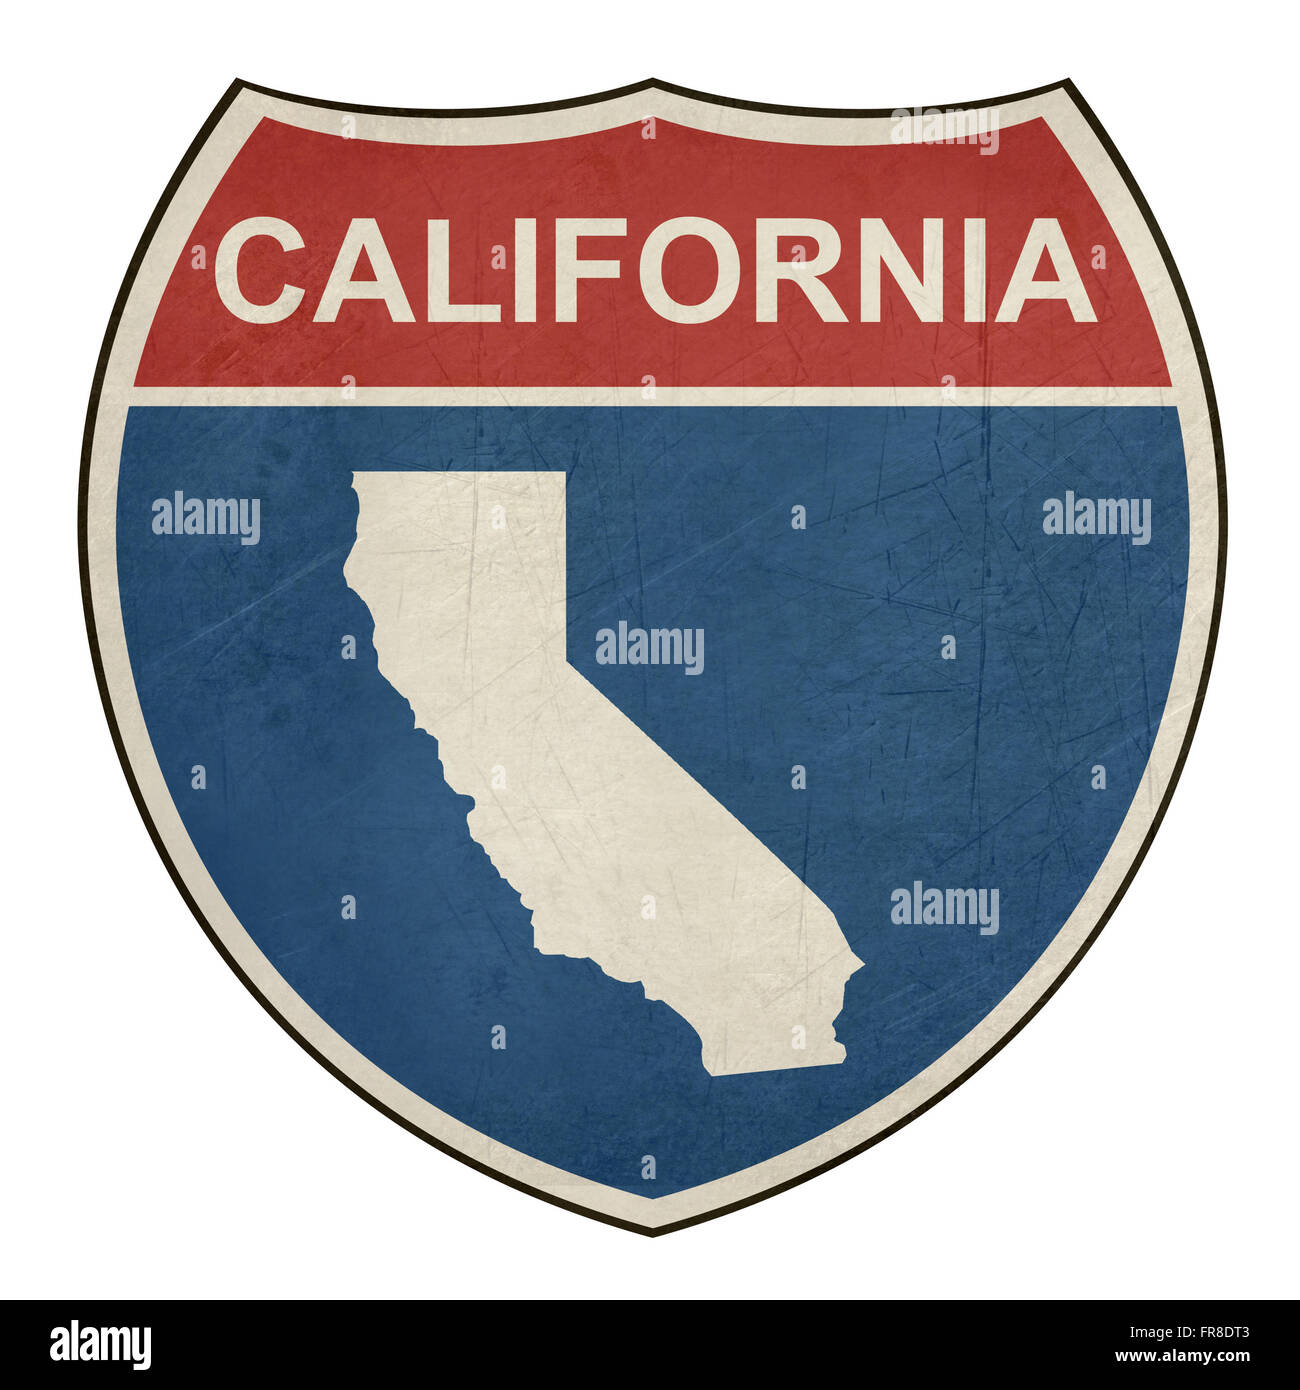 California American autopista interestatal escudo de carretera aislado sobre un fondo blanco. Foto de stock